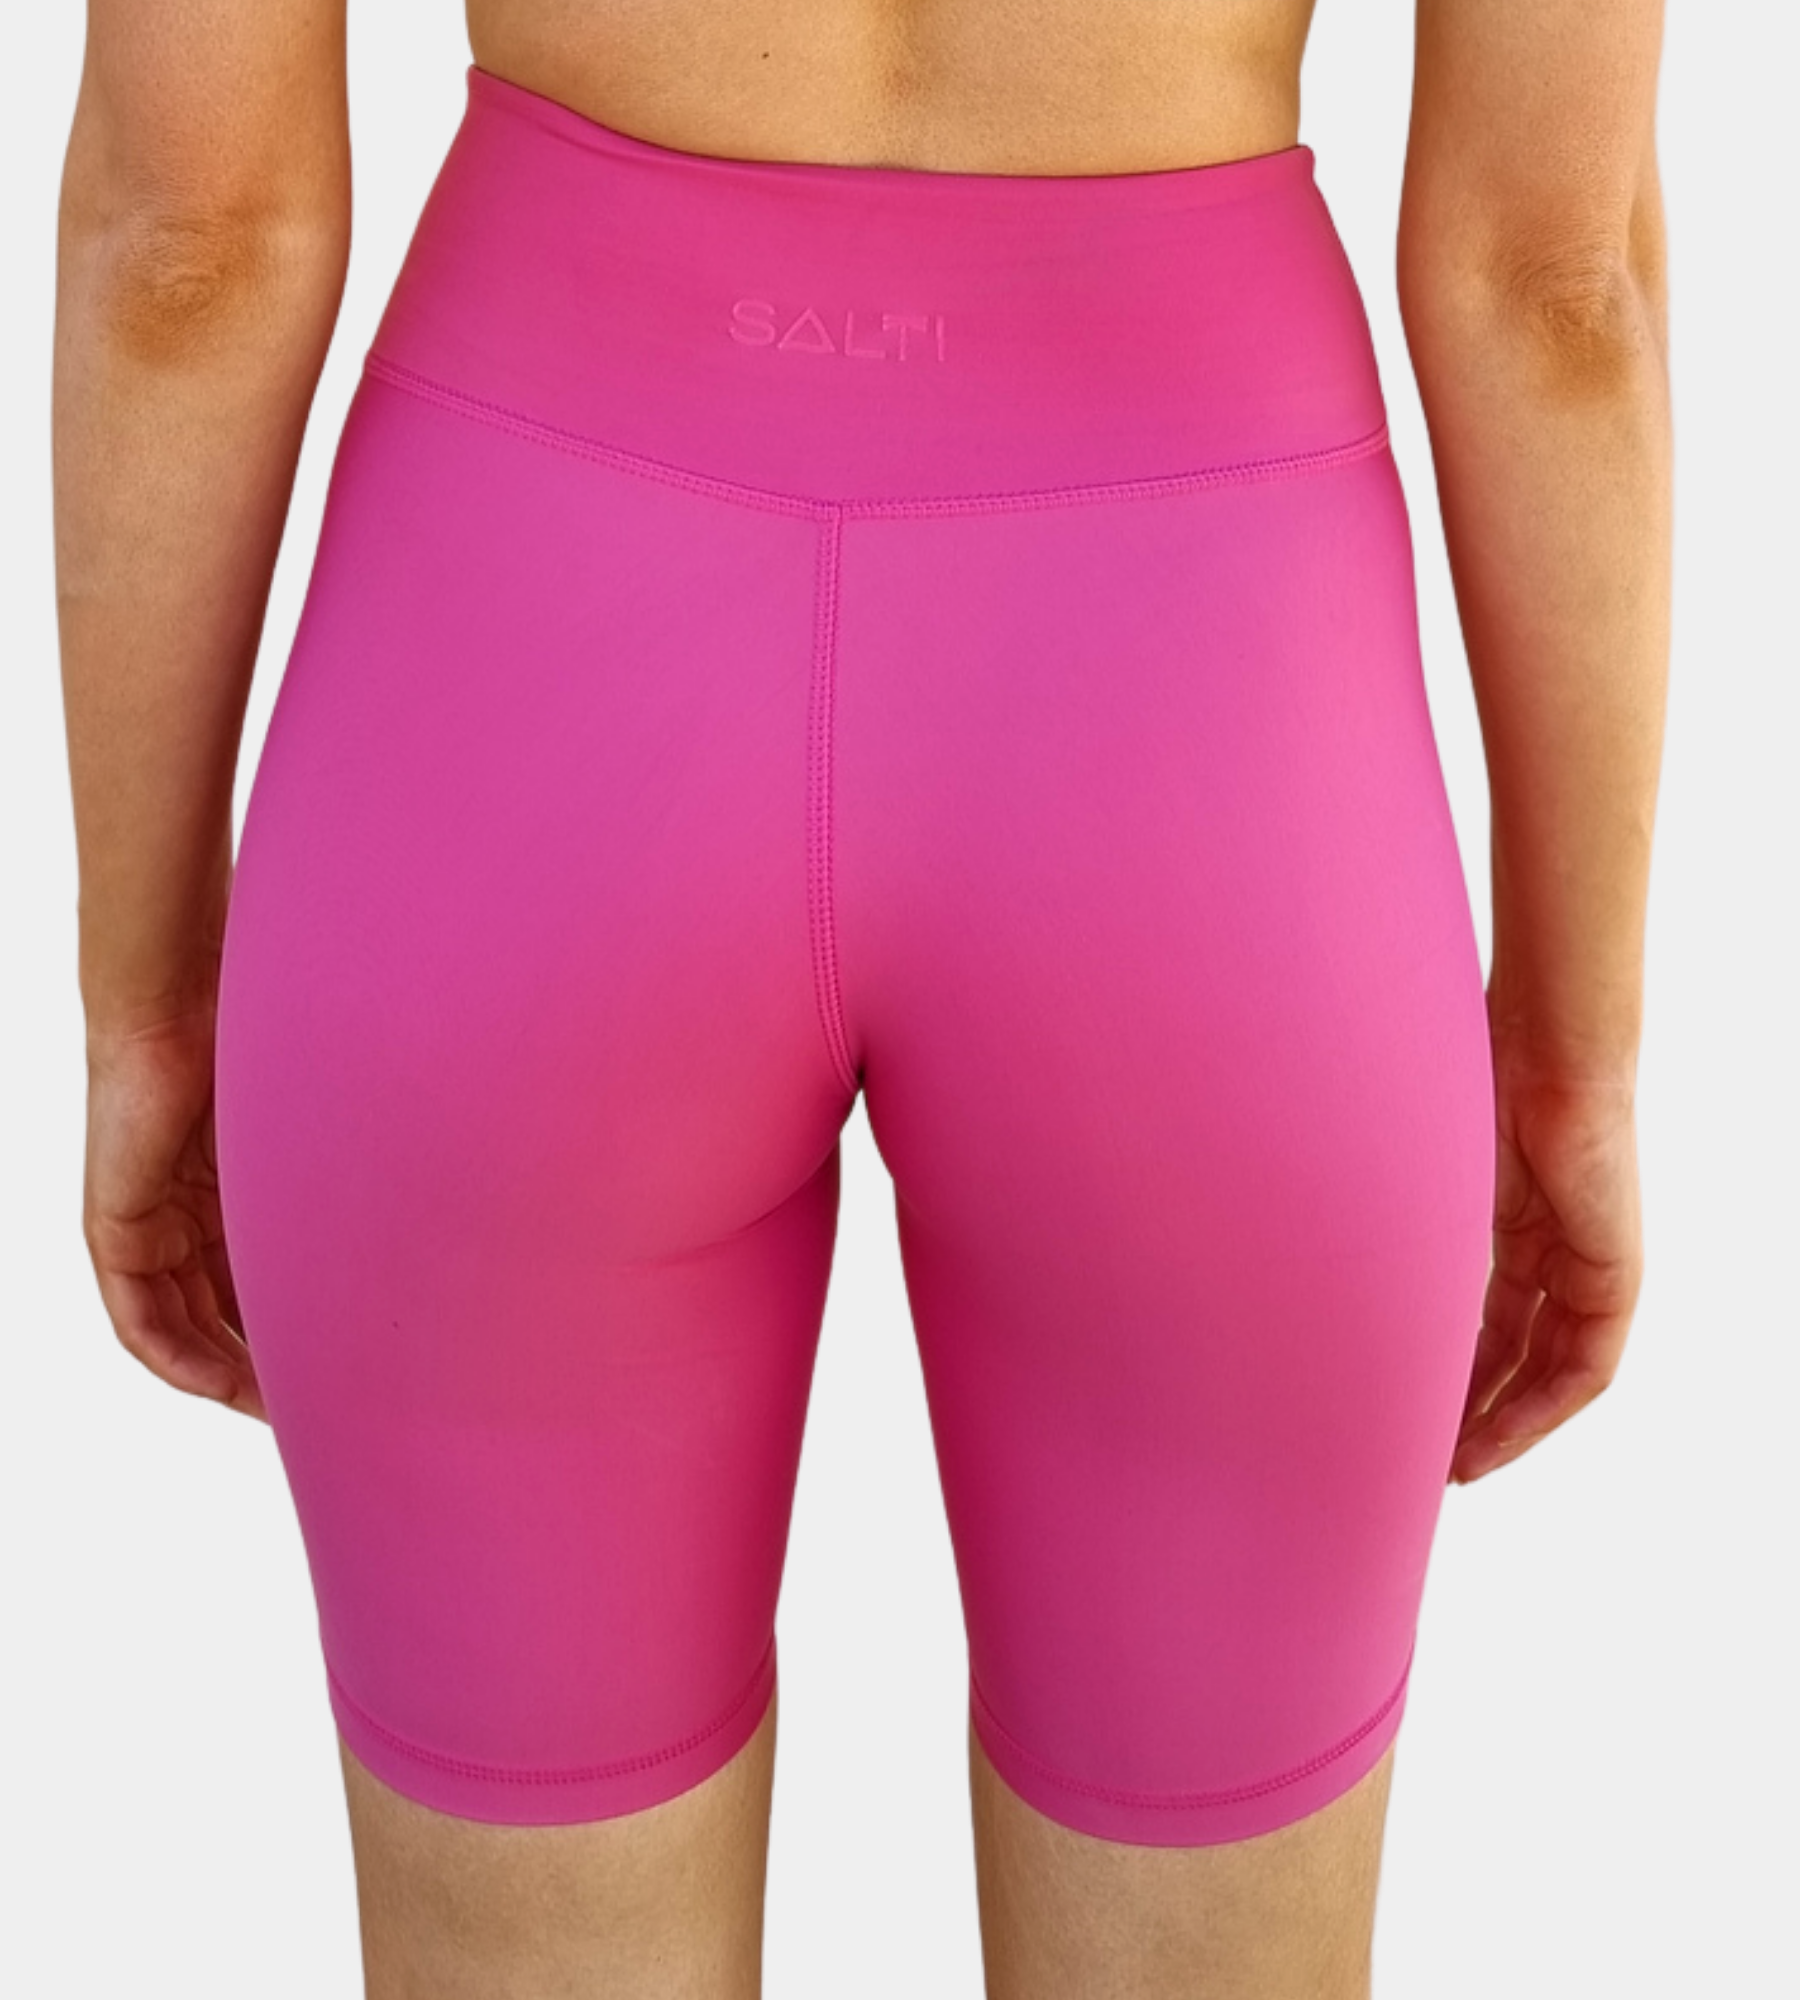 Women's Bike Shorts, Pink Bike Shorts, Salti